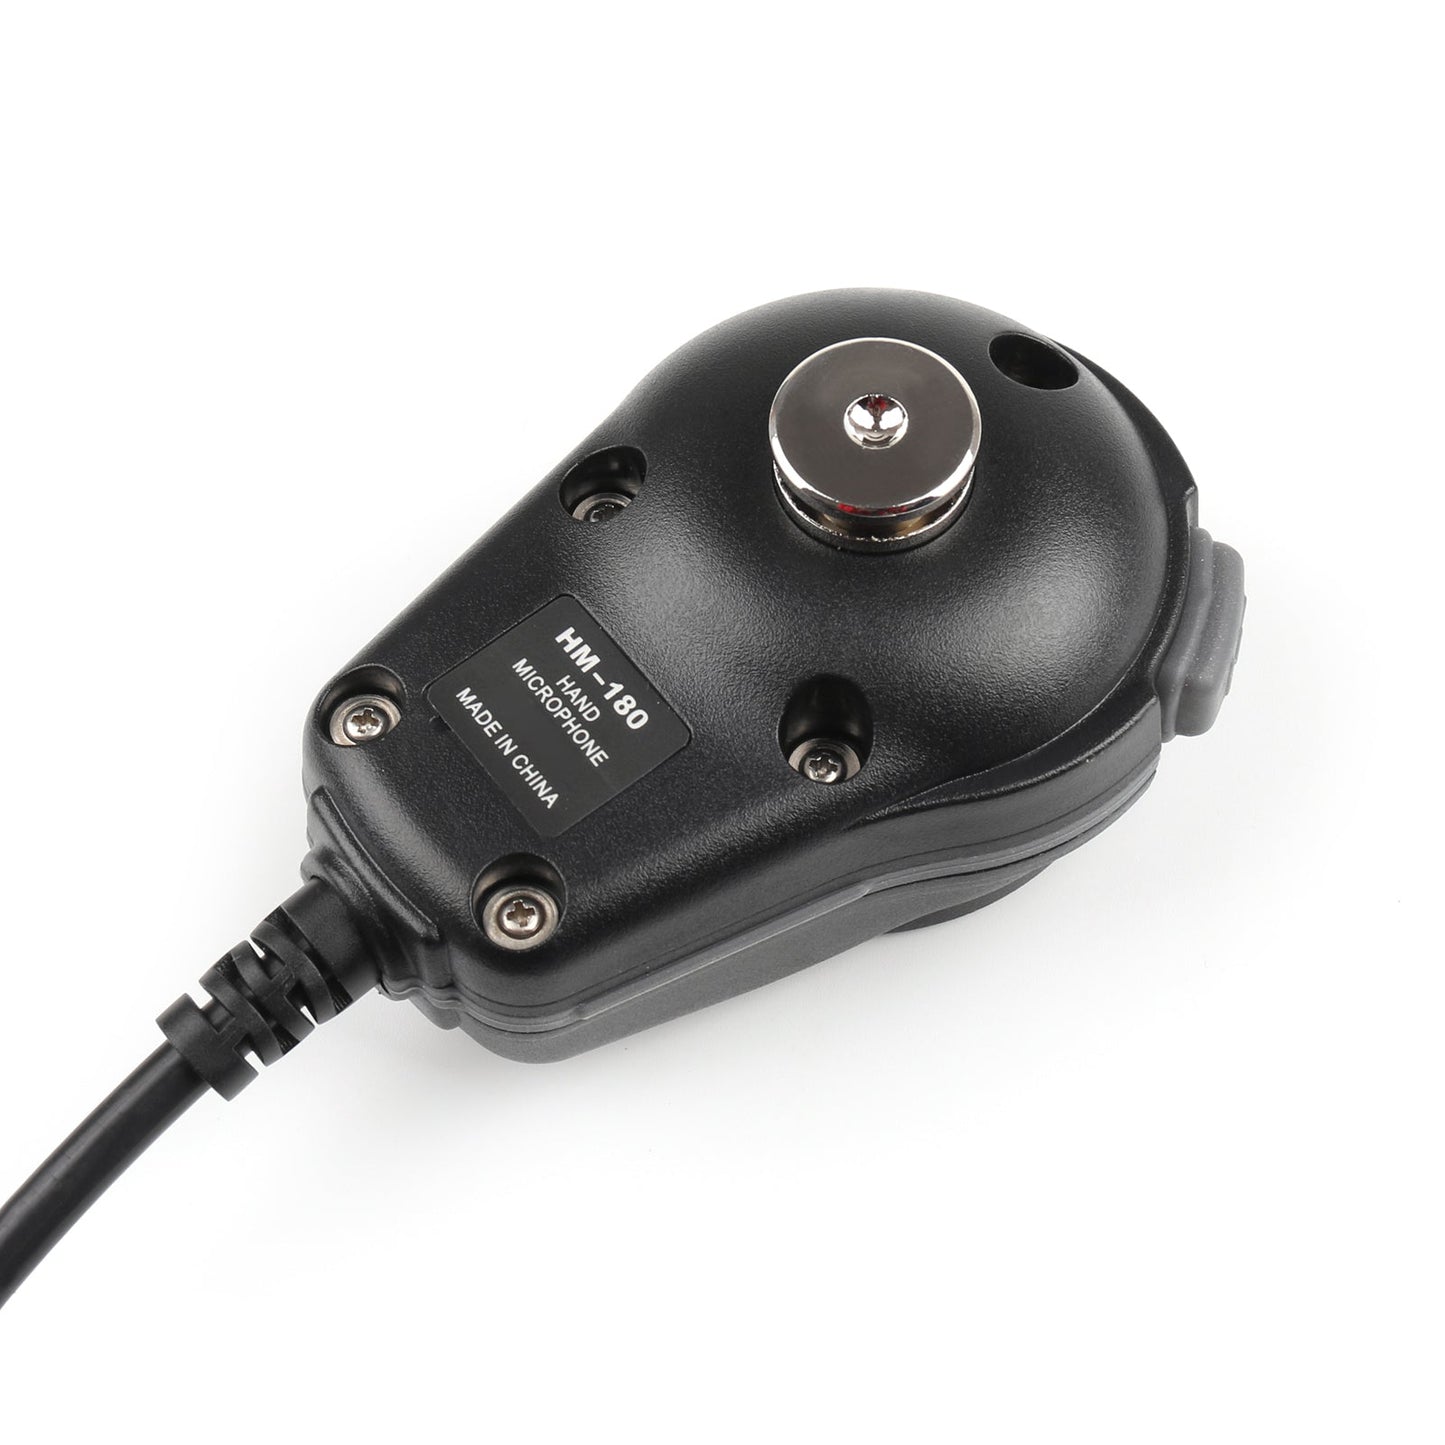 HM-180 Automikrofon Mit Hakenclip für ICOM IC-M700 Radios